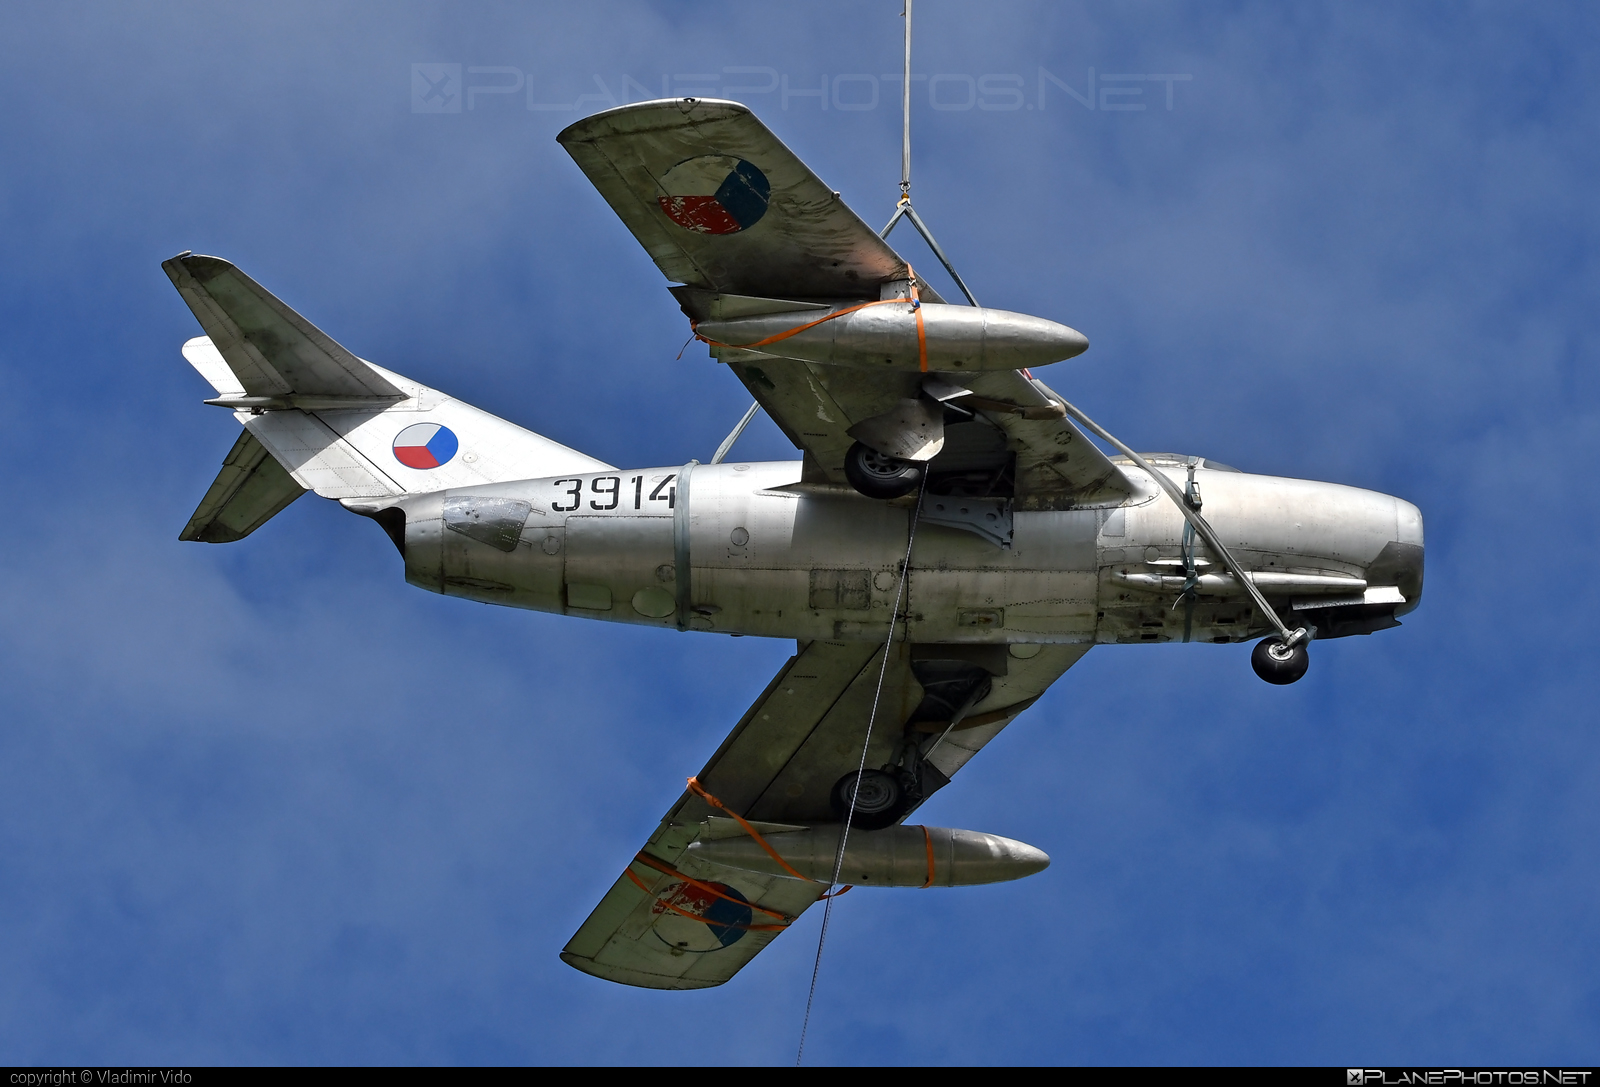 Mikoyan-Gurevich MiG-15bis - 3914 operated by Letectvo ČSĽA (Czechoslovak Air Force) #czechoslovakairforce #letectvocsla #mig #mig15 #mig15bis #mikoyangurevich